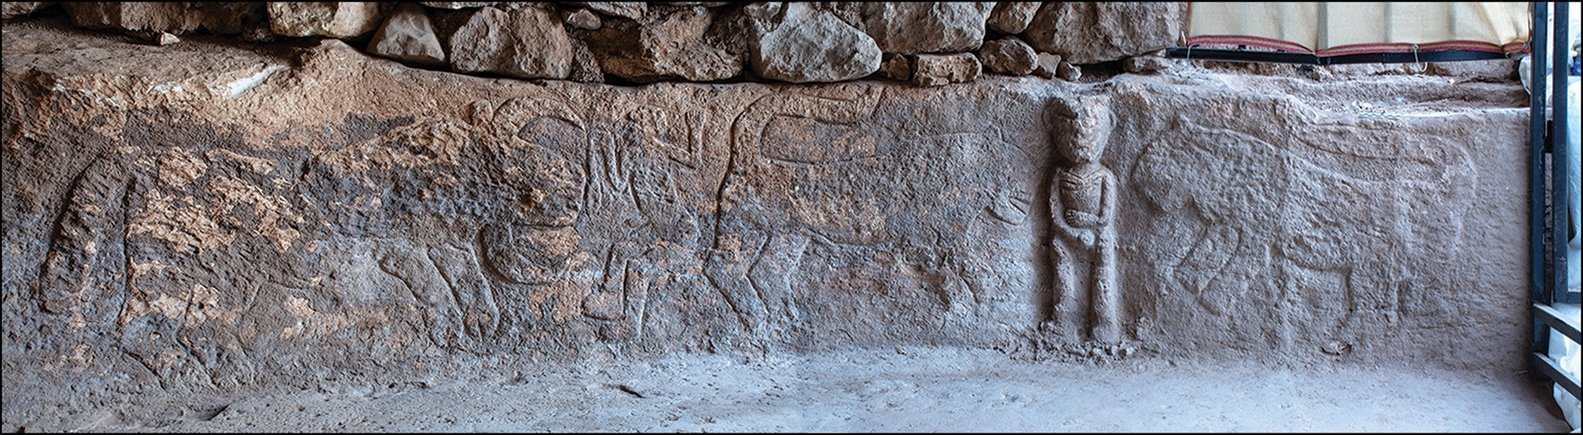 Oldest scene in world: 11,000-year-old wall relief near Göbeklitepe | Daily  Sabah